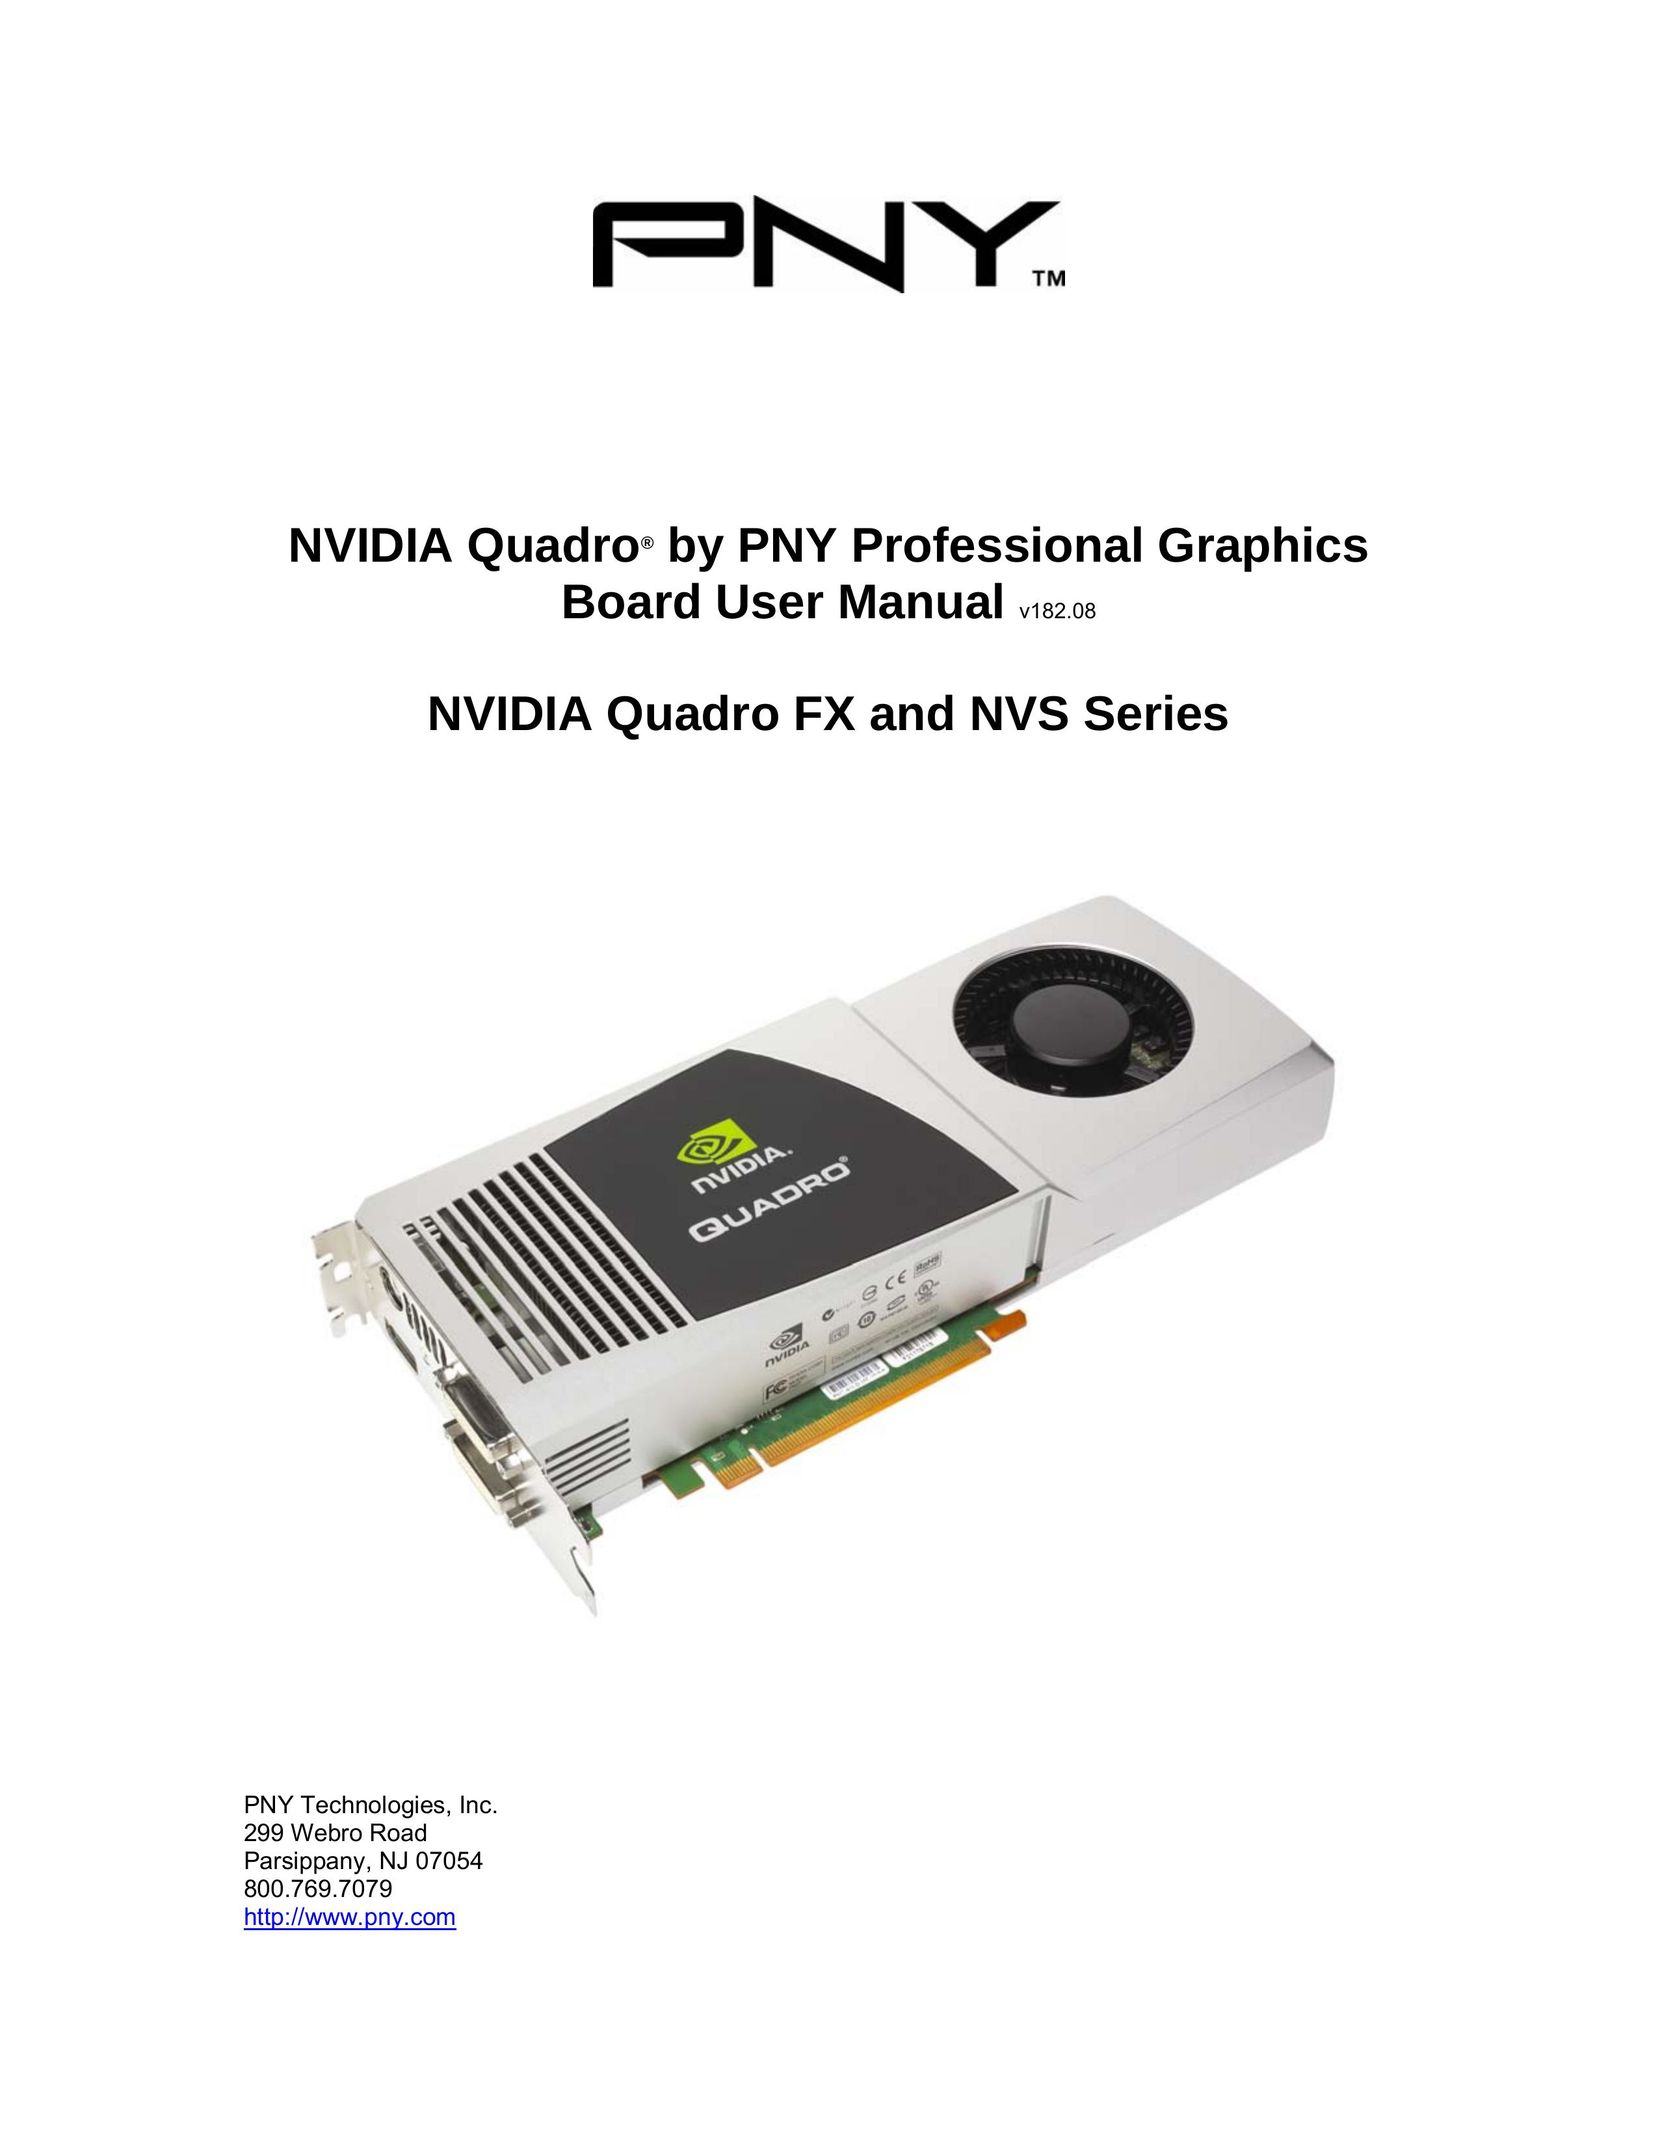 PNY NVS 280 Computer Hardware User Manual